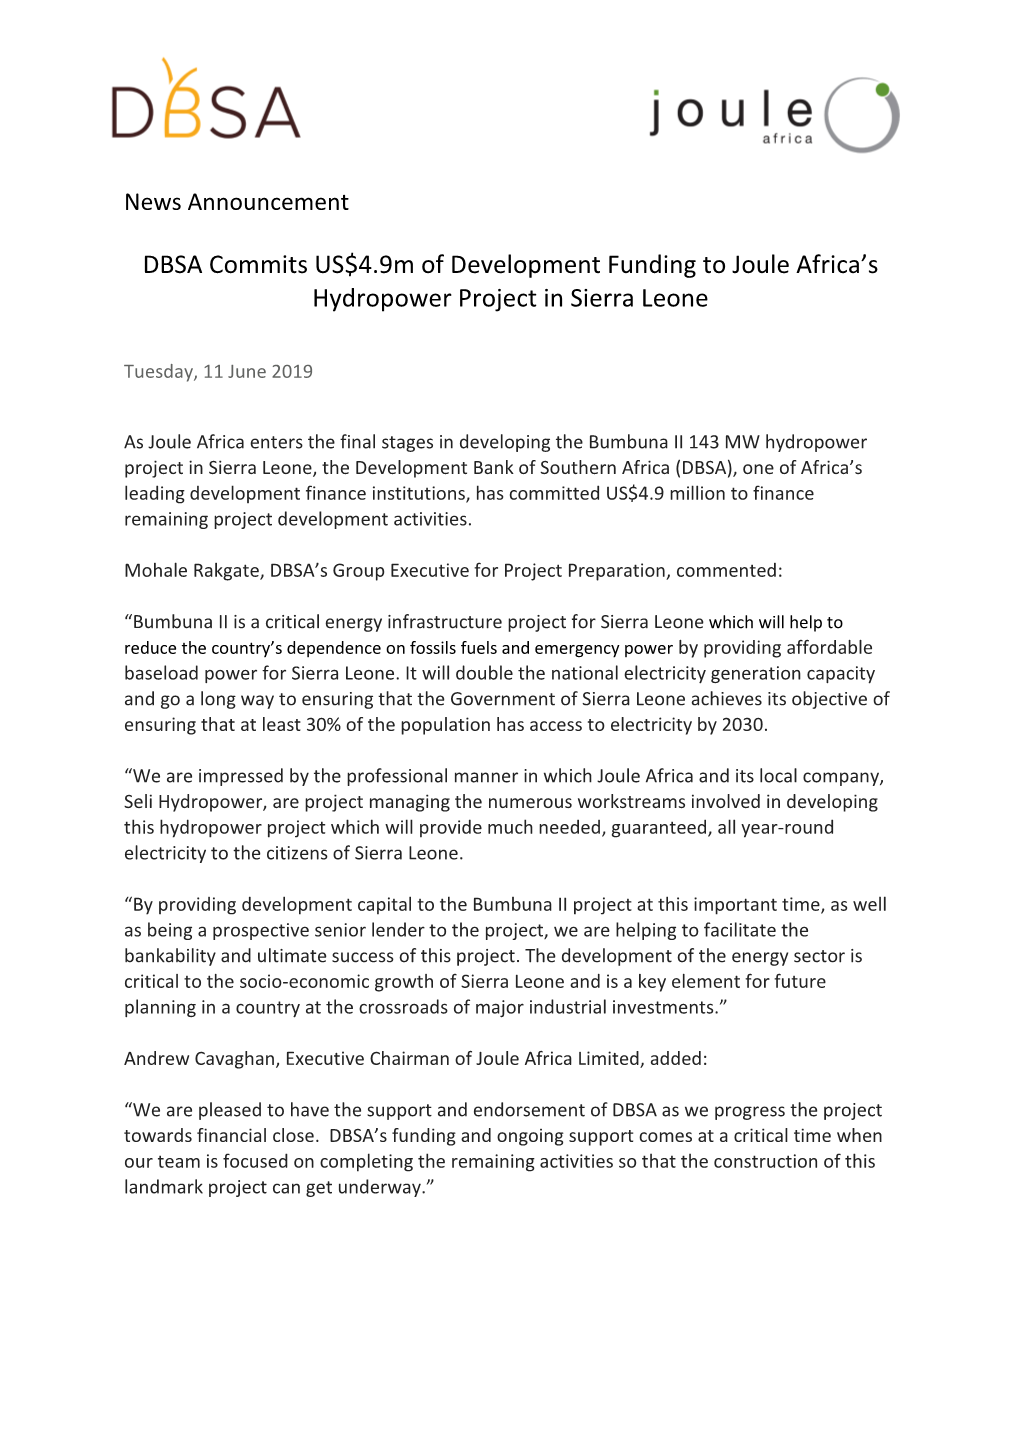 DBSA Commits US$4.9M of Development Funding to Joule Africa’S Hydropower Project in Sierra Leone